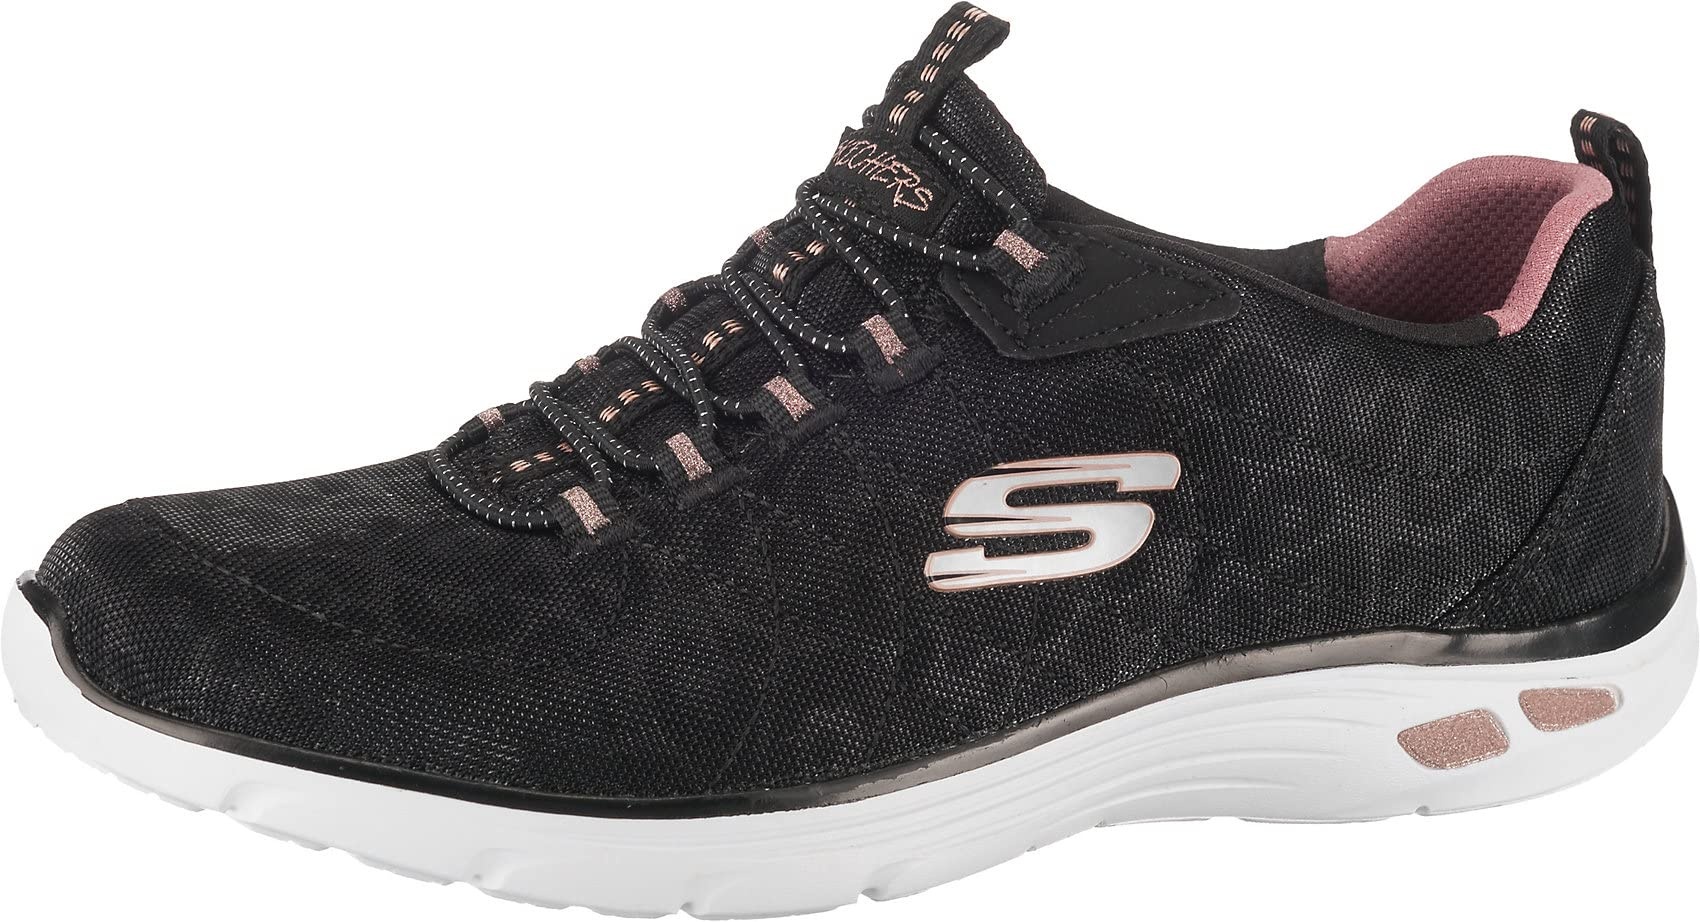 Skechers Damen Empire D'lux Spotted-12825 Sneaker, Schwarz (Black Rose Gold Bkrg), 37 EU